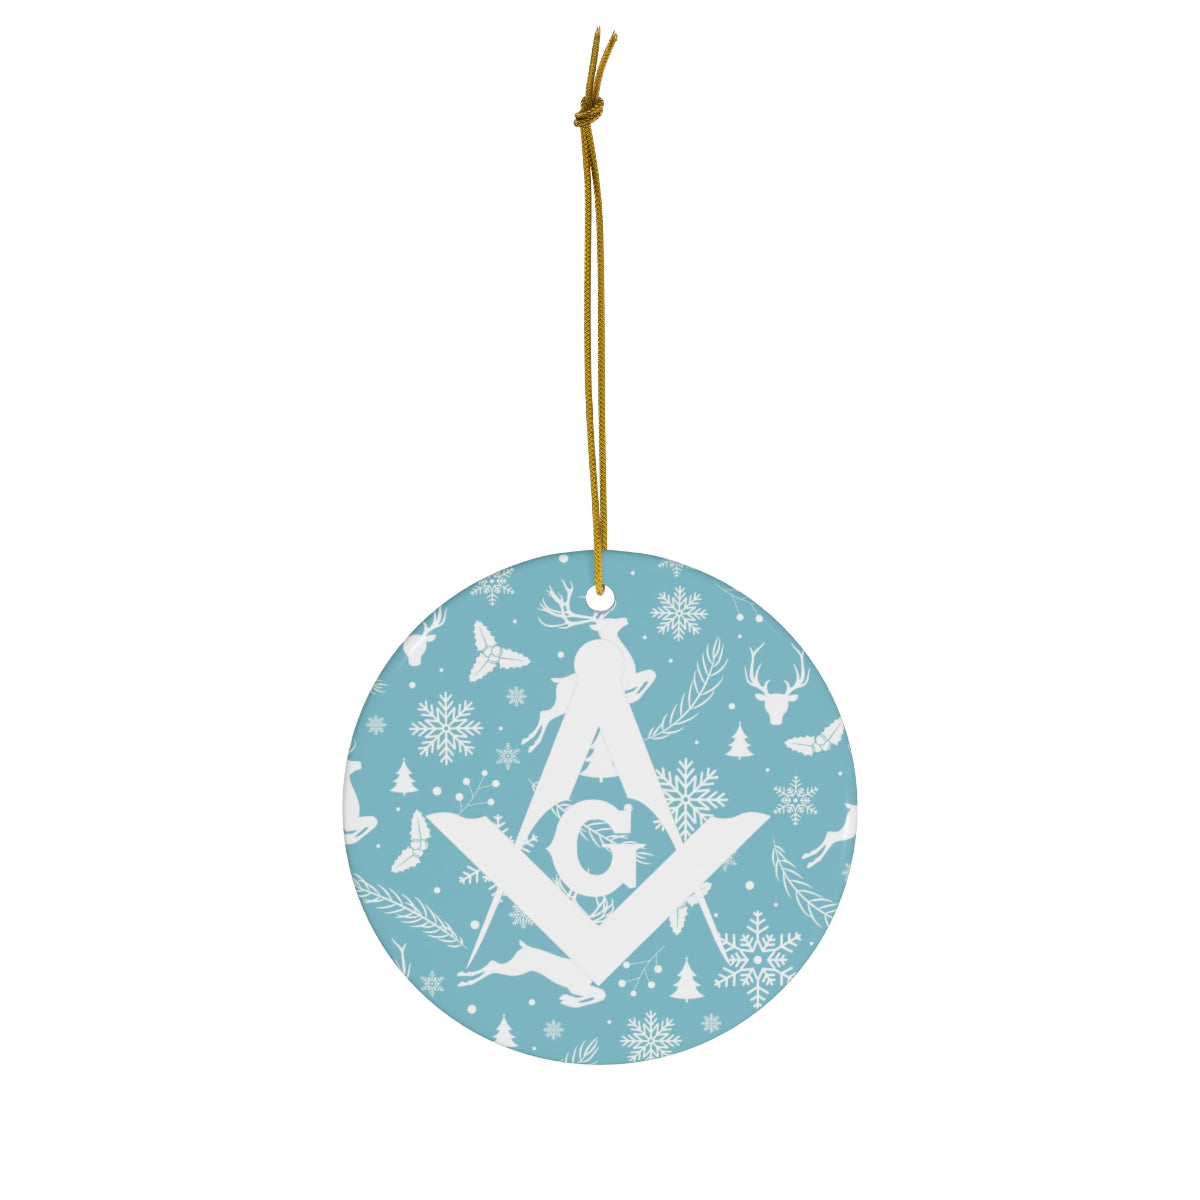 Master Mason Blue Lodge Christmas Ornament - Ceramic 2 Shapes - Bricks Masons